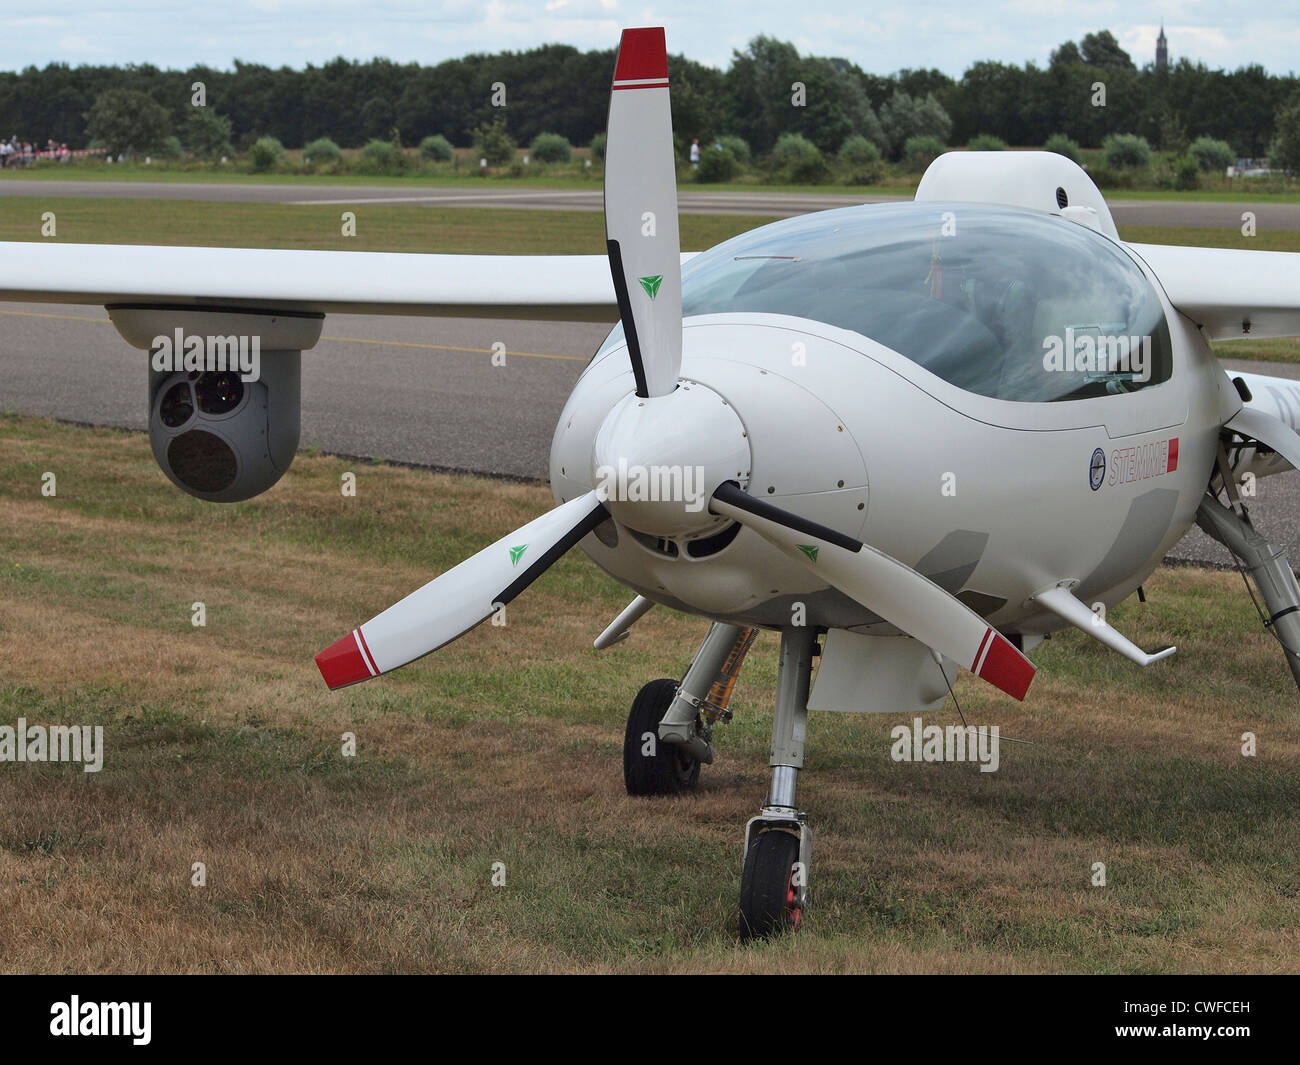 Stemme S6 motoveleggiatore aeromobili equipaggiati per la fotografia aerea. Seppe airfield, Paesi Bassi Foto Stock